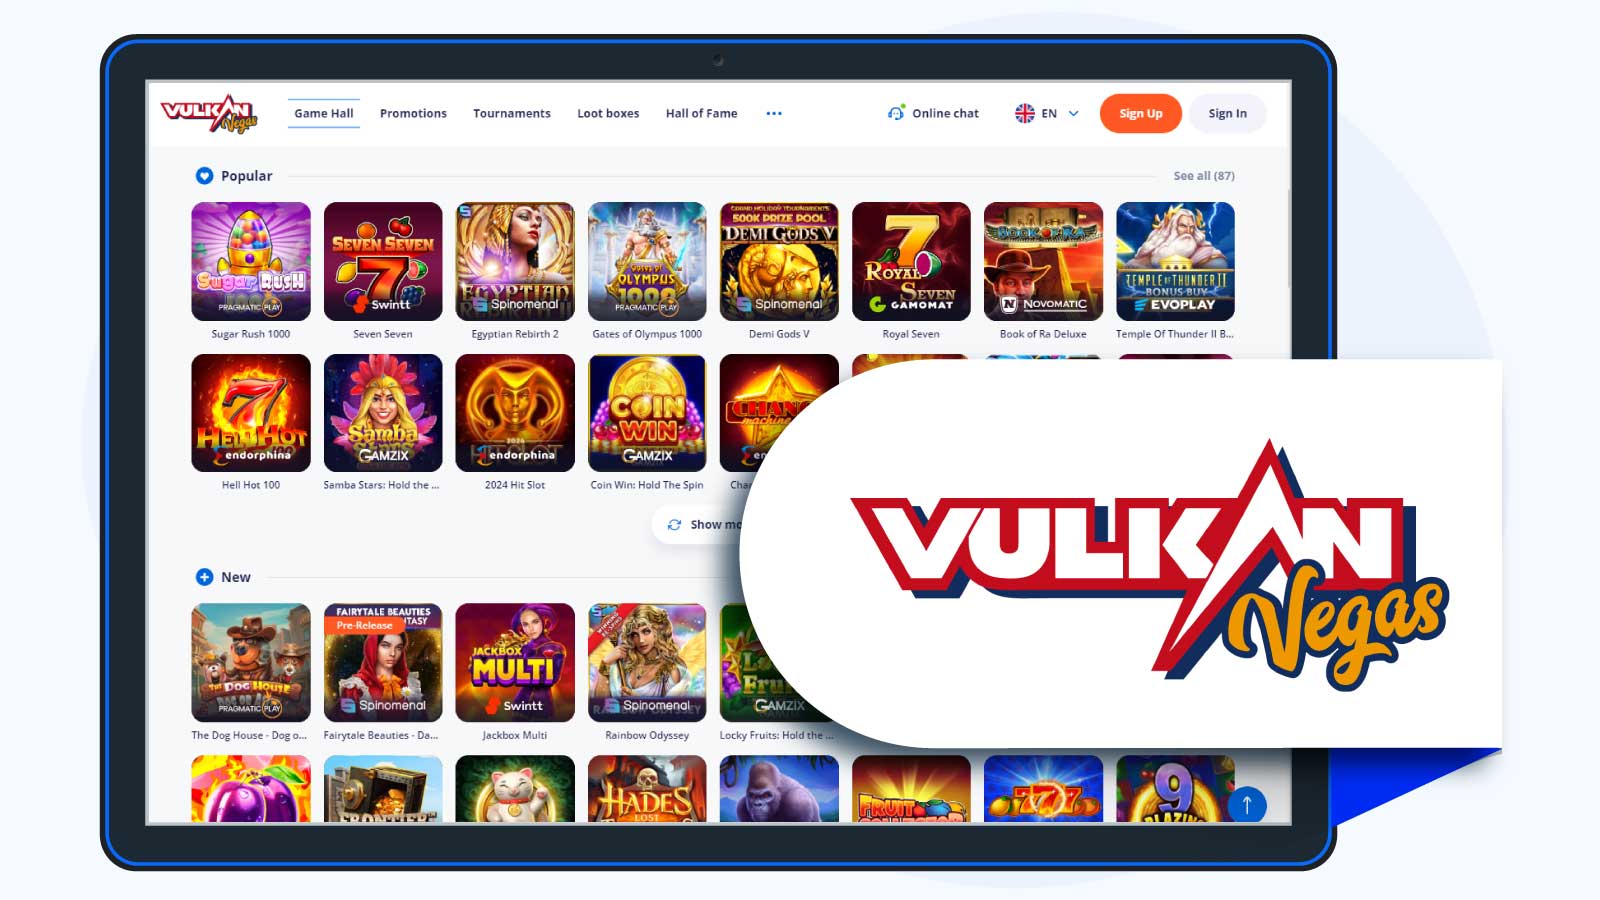 Vulkan Vegas Casino – User’s Choice Among Top Rated Online Casinos